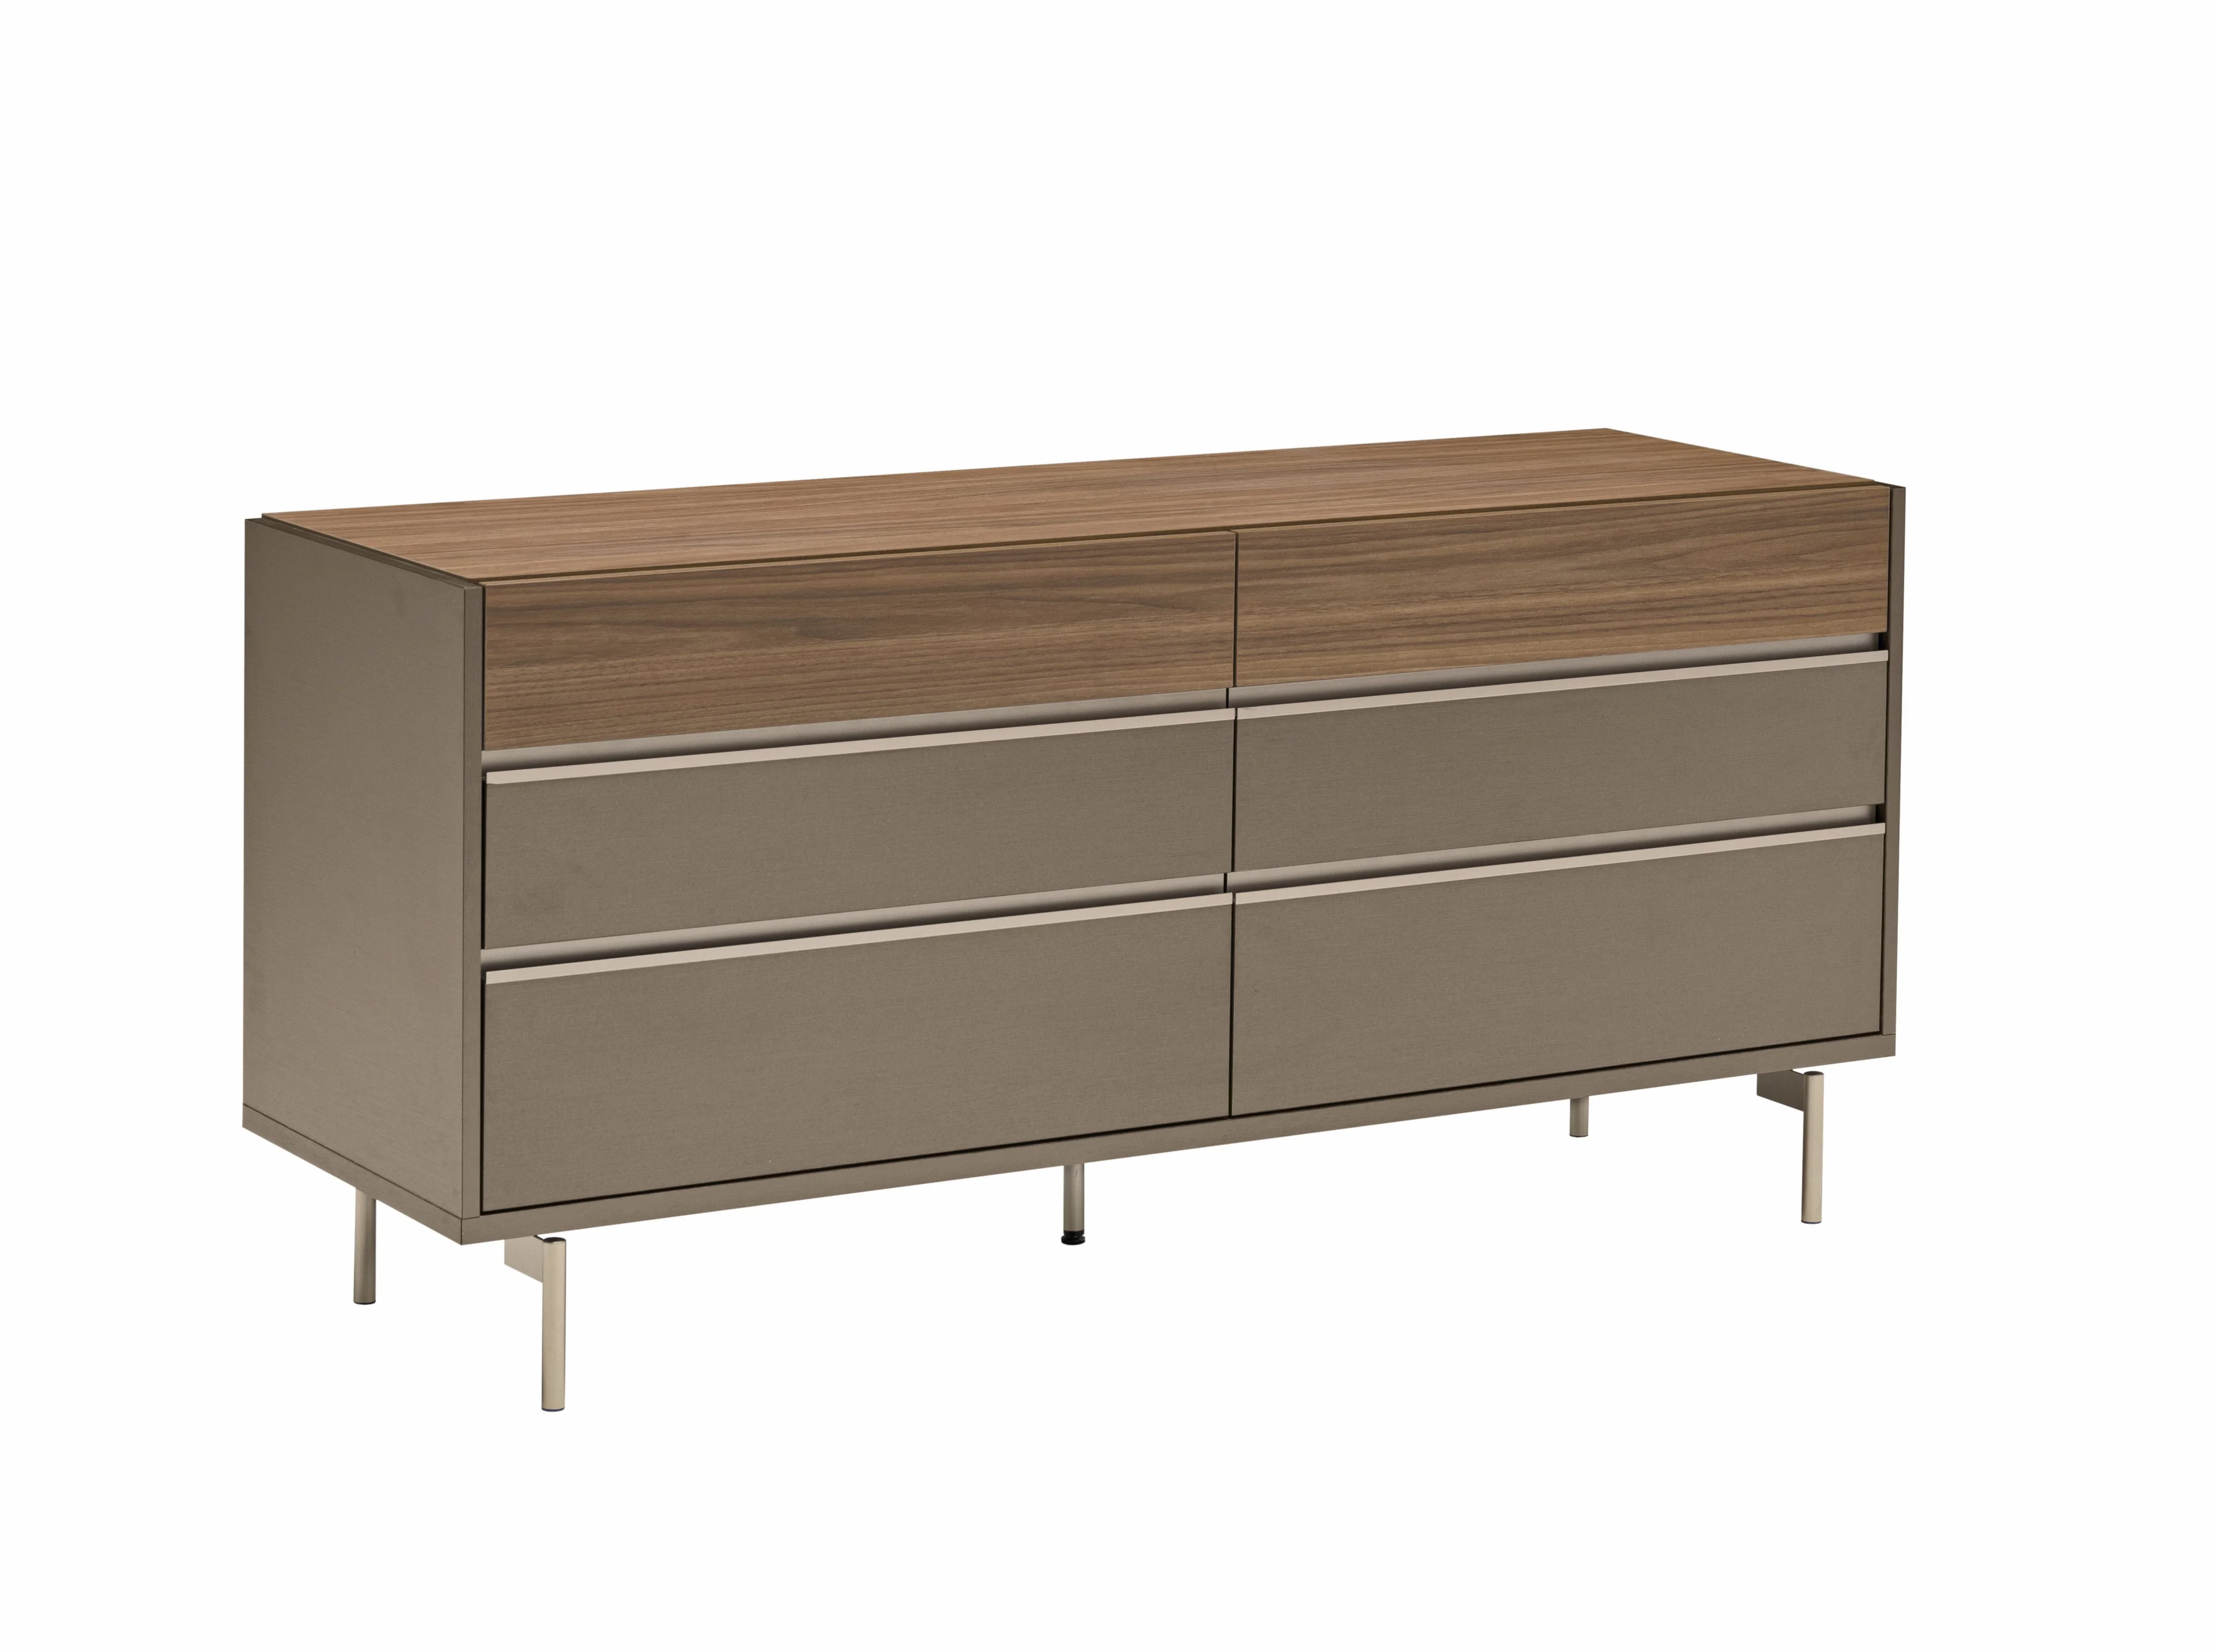 Alf Italia City Life KJCY120 6 Drawer Dresser, HomeWorld Furniture